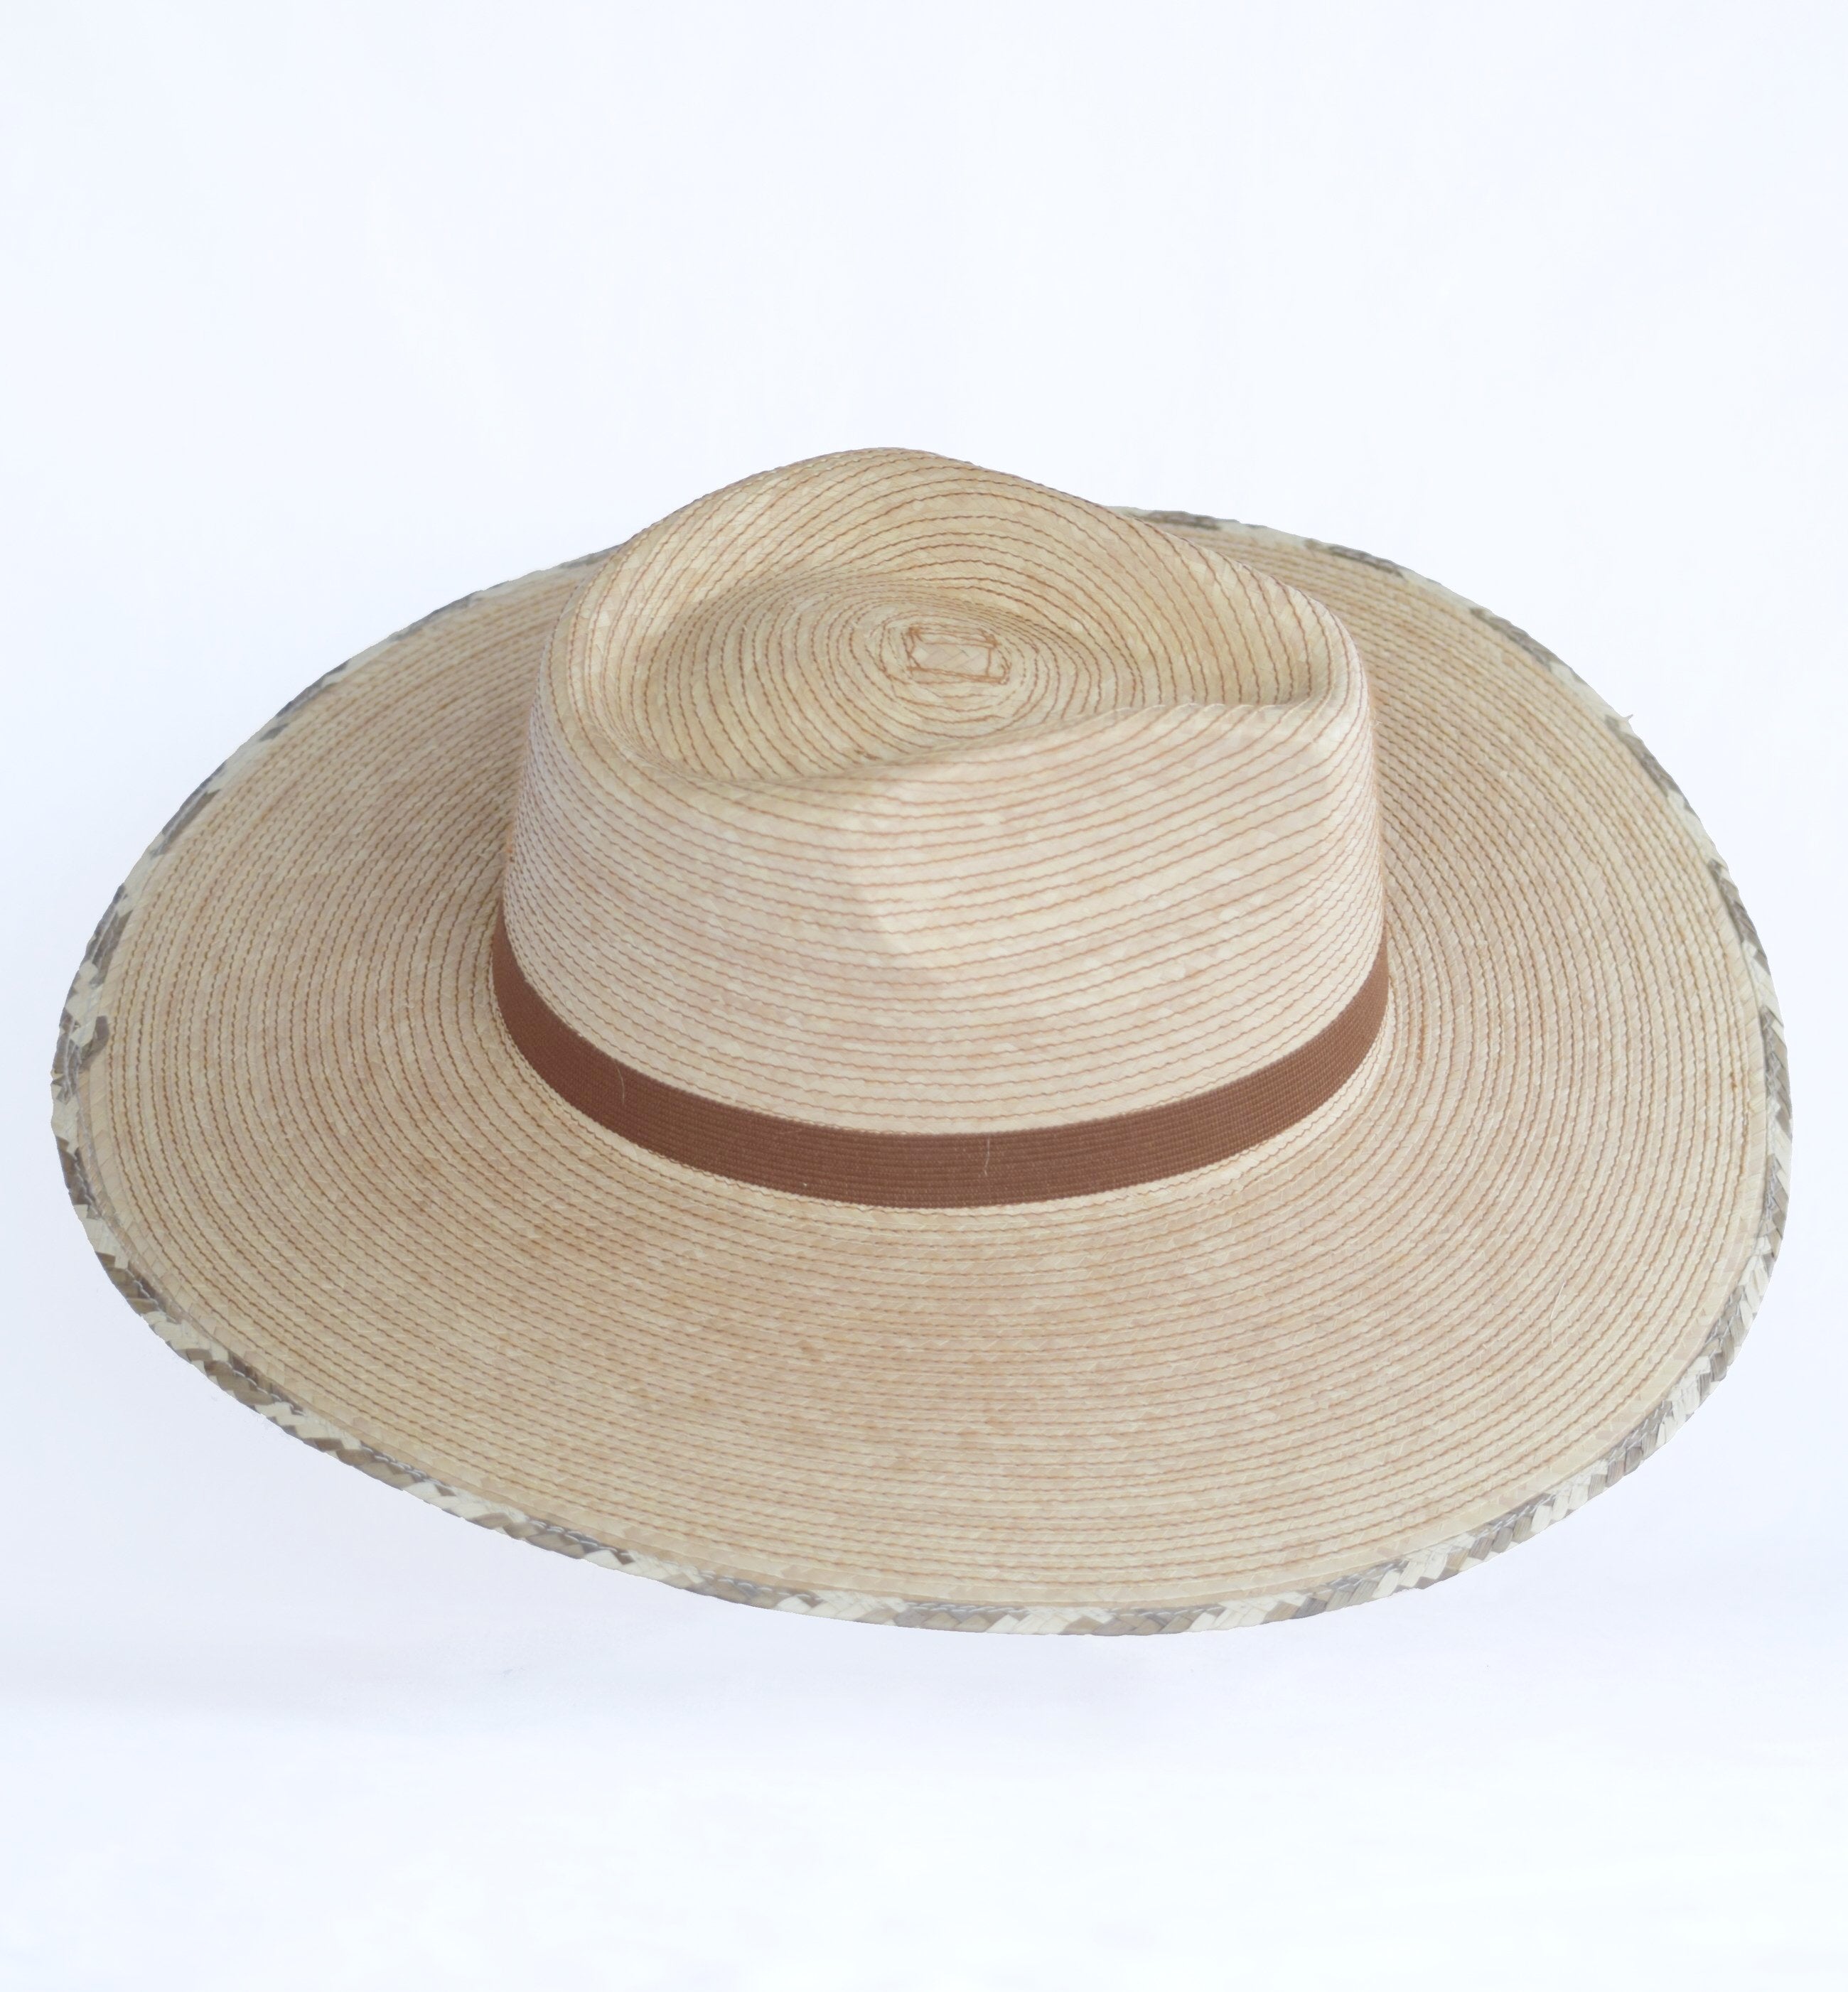 Studio Maya Mercado Straw Cowboy Hat 